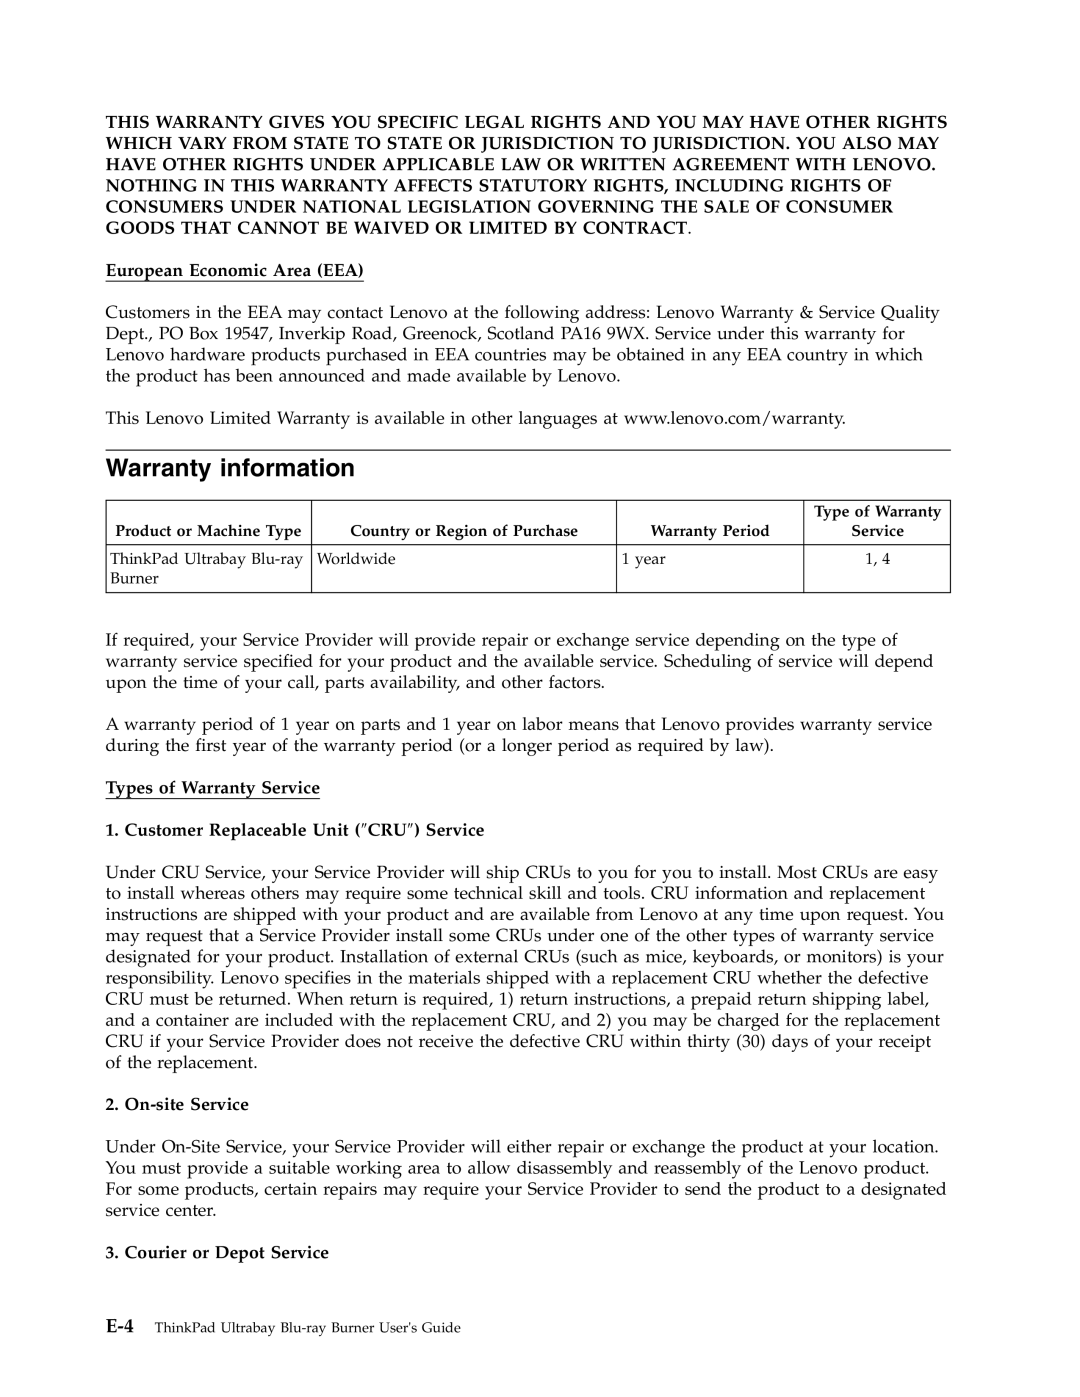 Lenovo 43N3201 manual Warranty information, European Economic Area EEA, Types of Warranty Service, On-siteService 